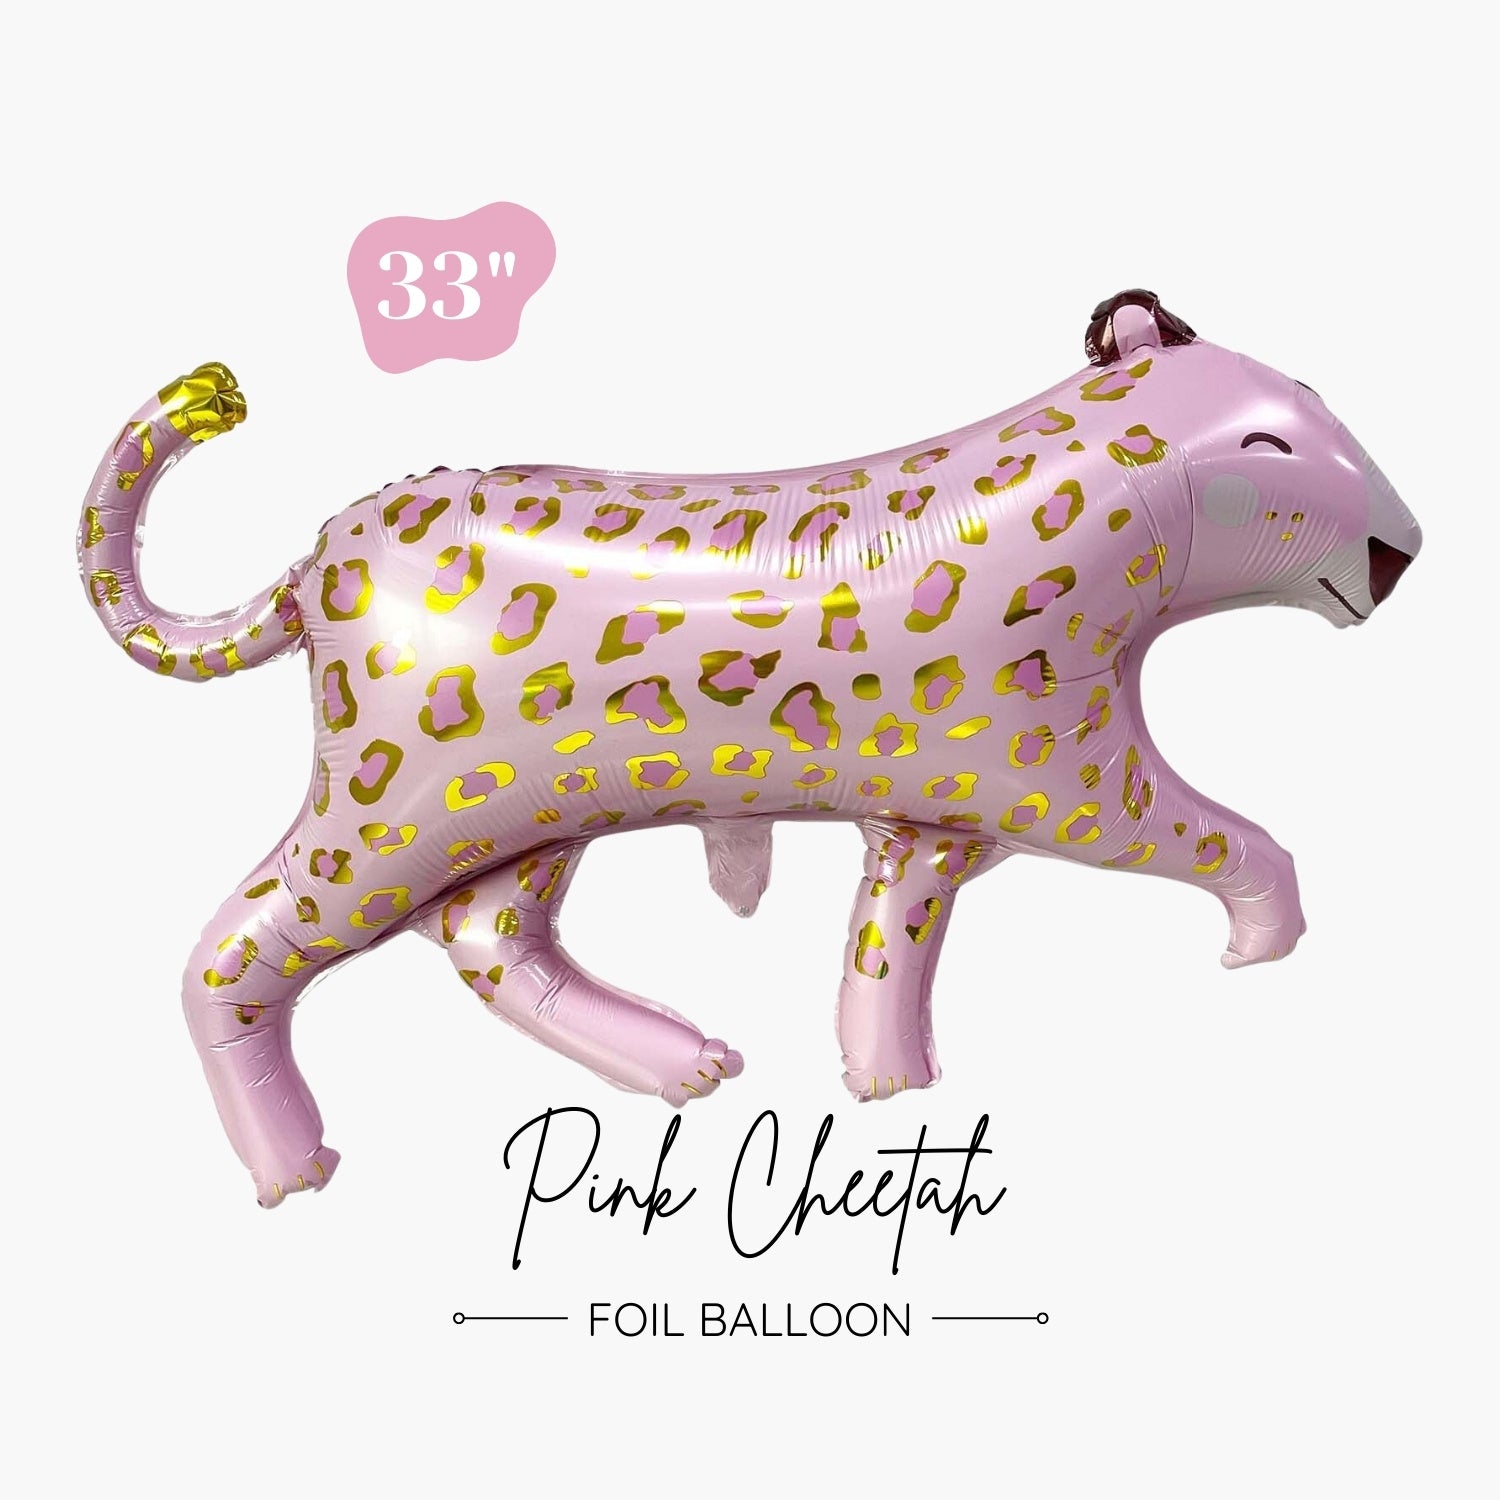 Pink Cheetah Foil Balloon 33" - Girls' Safari Animal Birthday Party Decorations